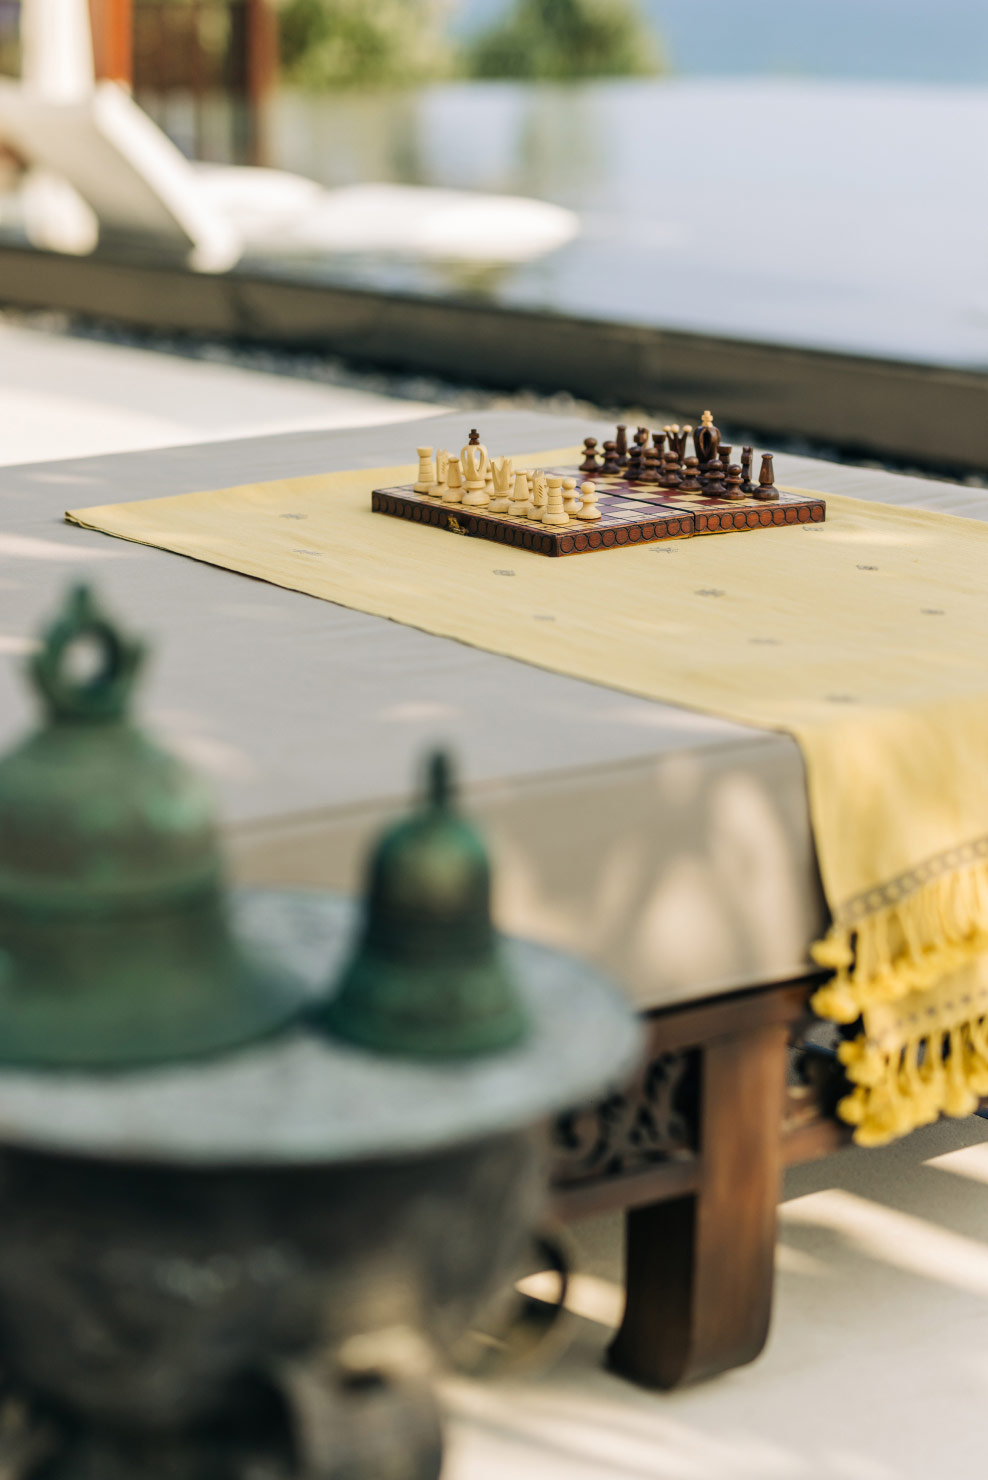 Ani-Sri-Lanka_resort_chess